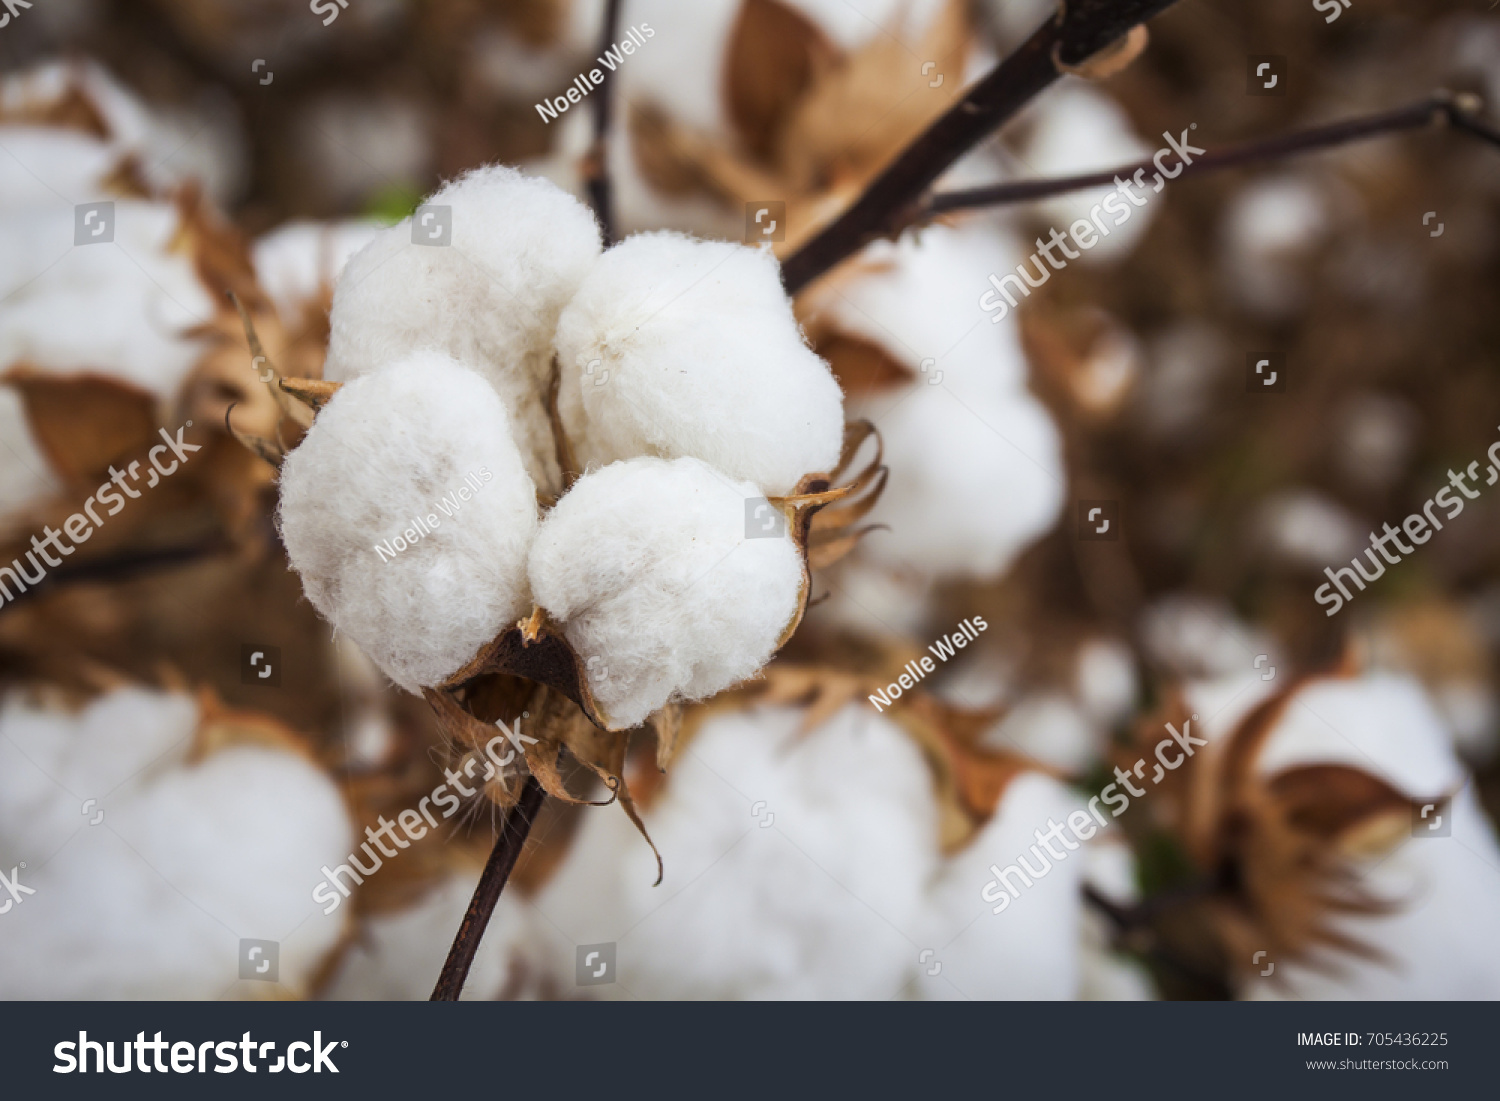 Closeup Open Defoliated Cotton Boll in Arizona Southwest Agriculture Field #705436225